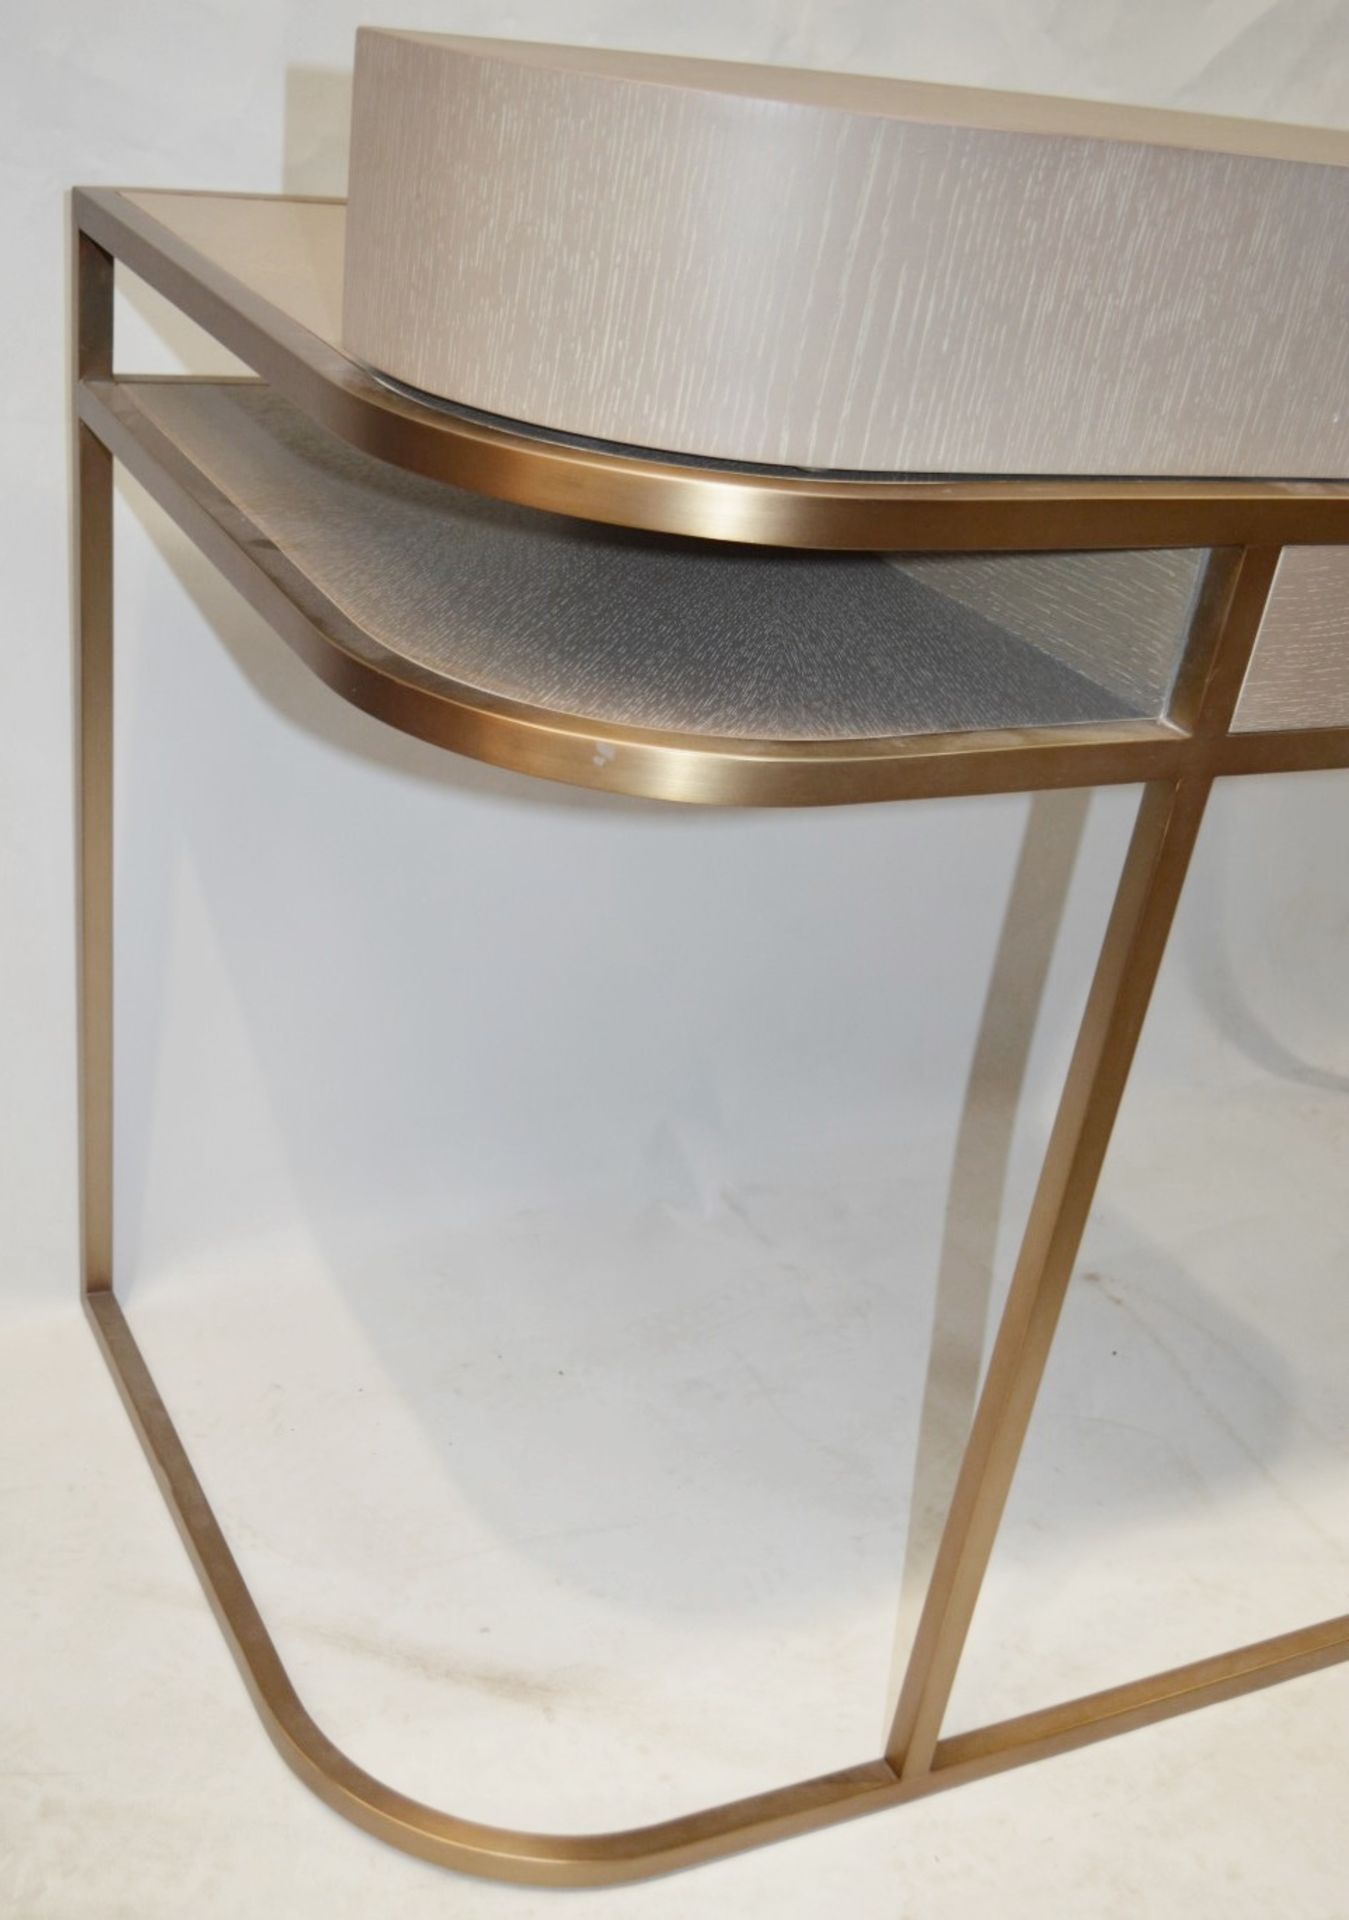 1 x EICHHOLTZ 'Highland' Designer Desk With Washed Oak And Brushed Brass Finishes - Ex-Display - - Image 11 of 12